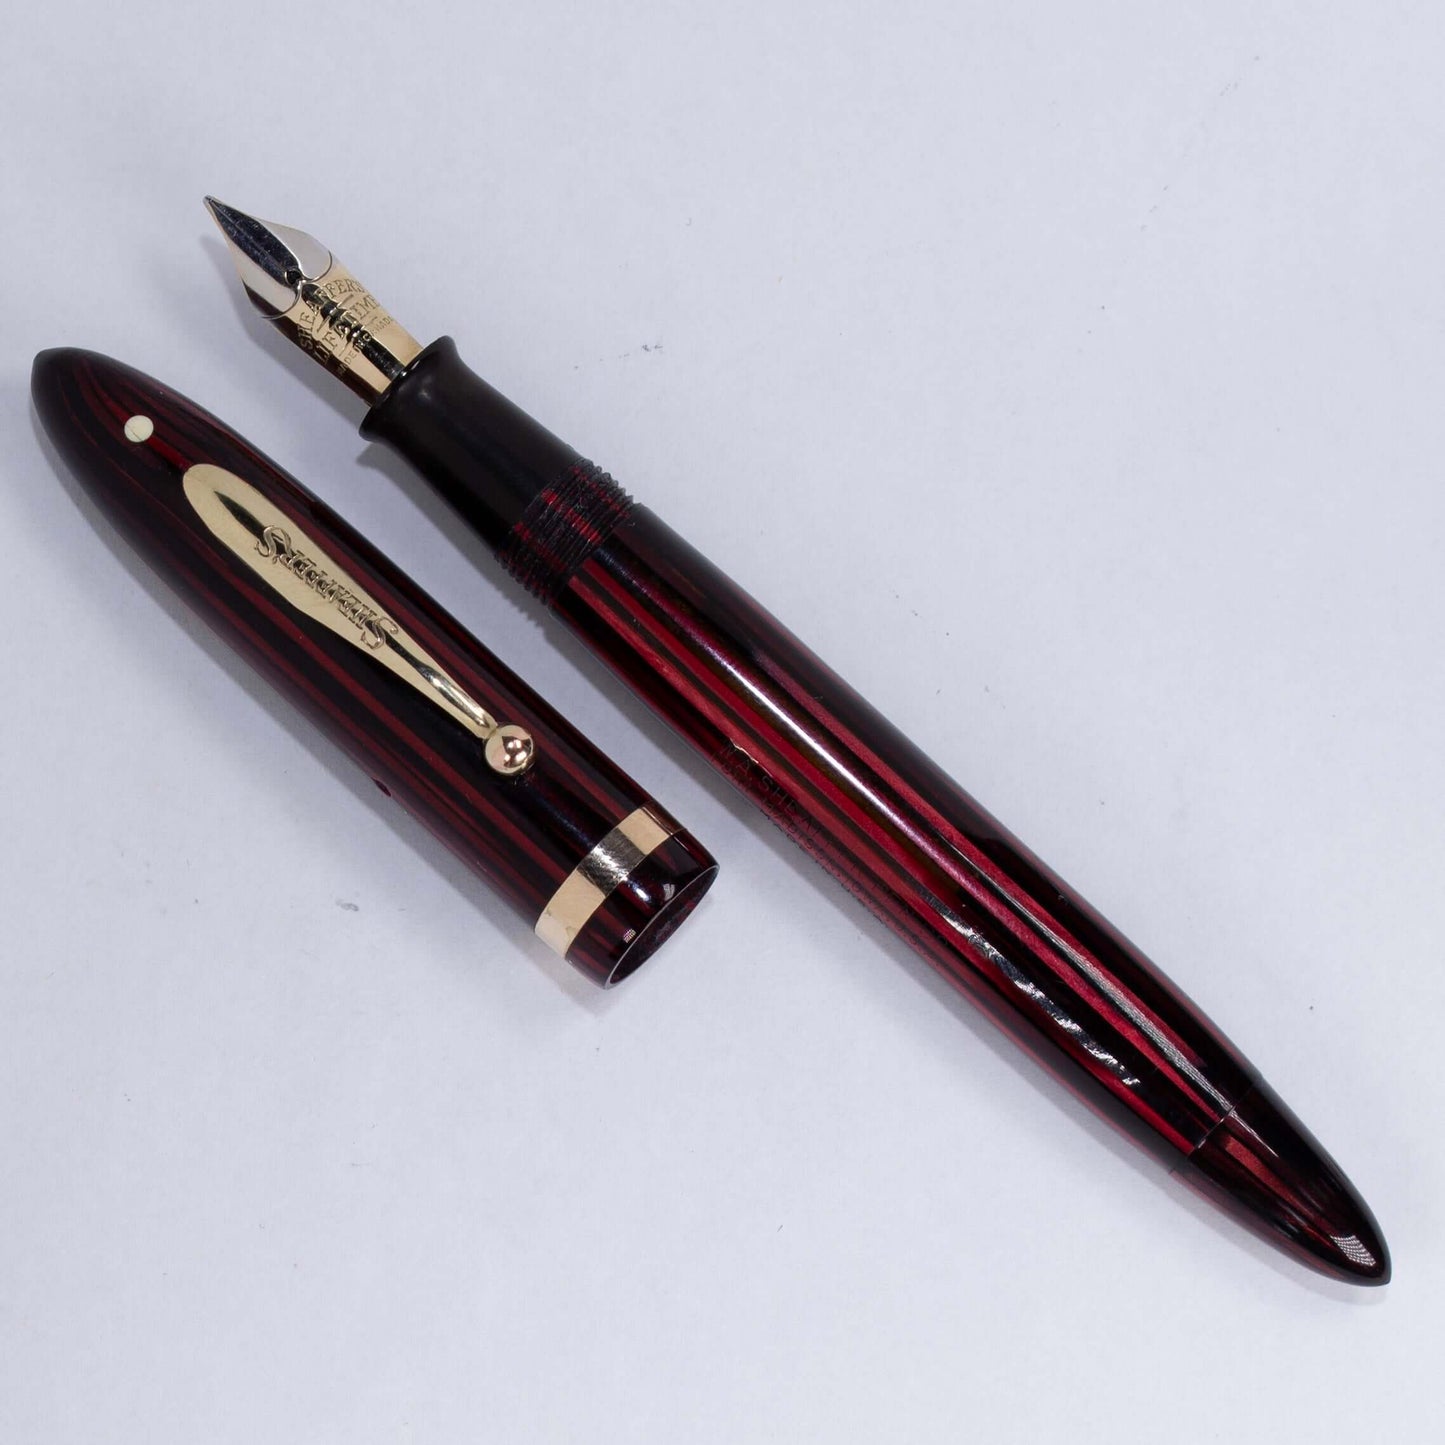 Sheaffer Balance Vintage Fountain Pen, Carmine red with Rolled Gold Trim. Medium two-tone 14K nib